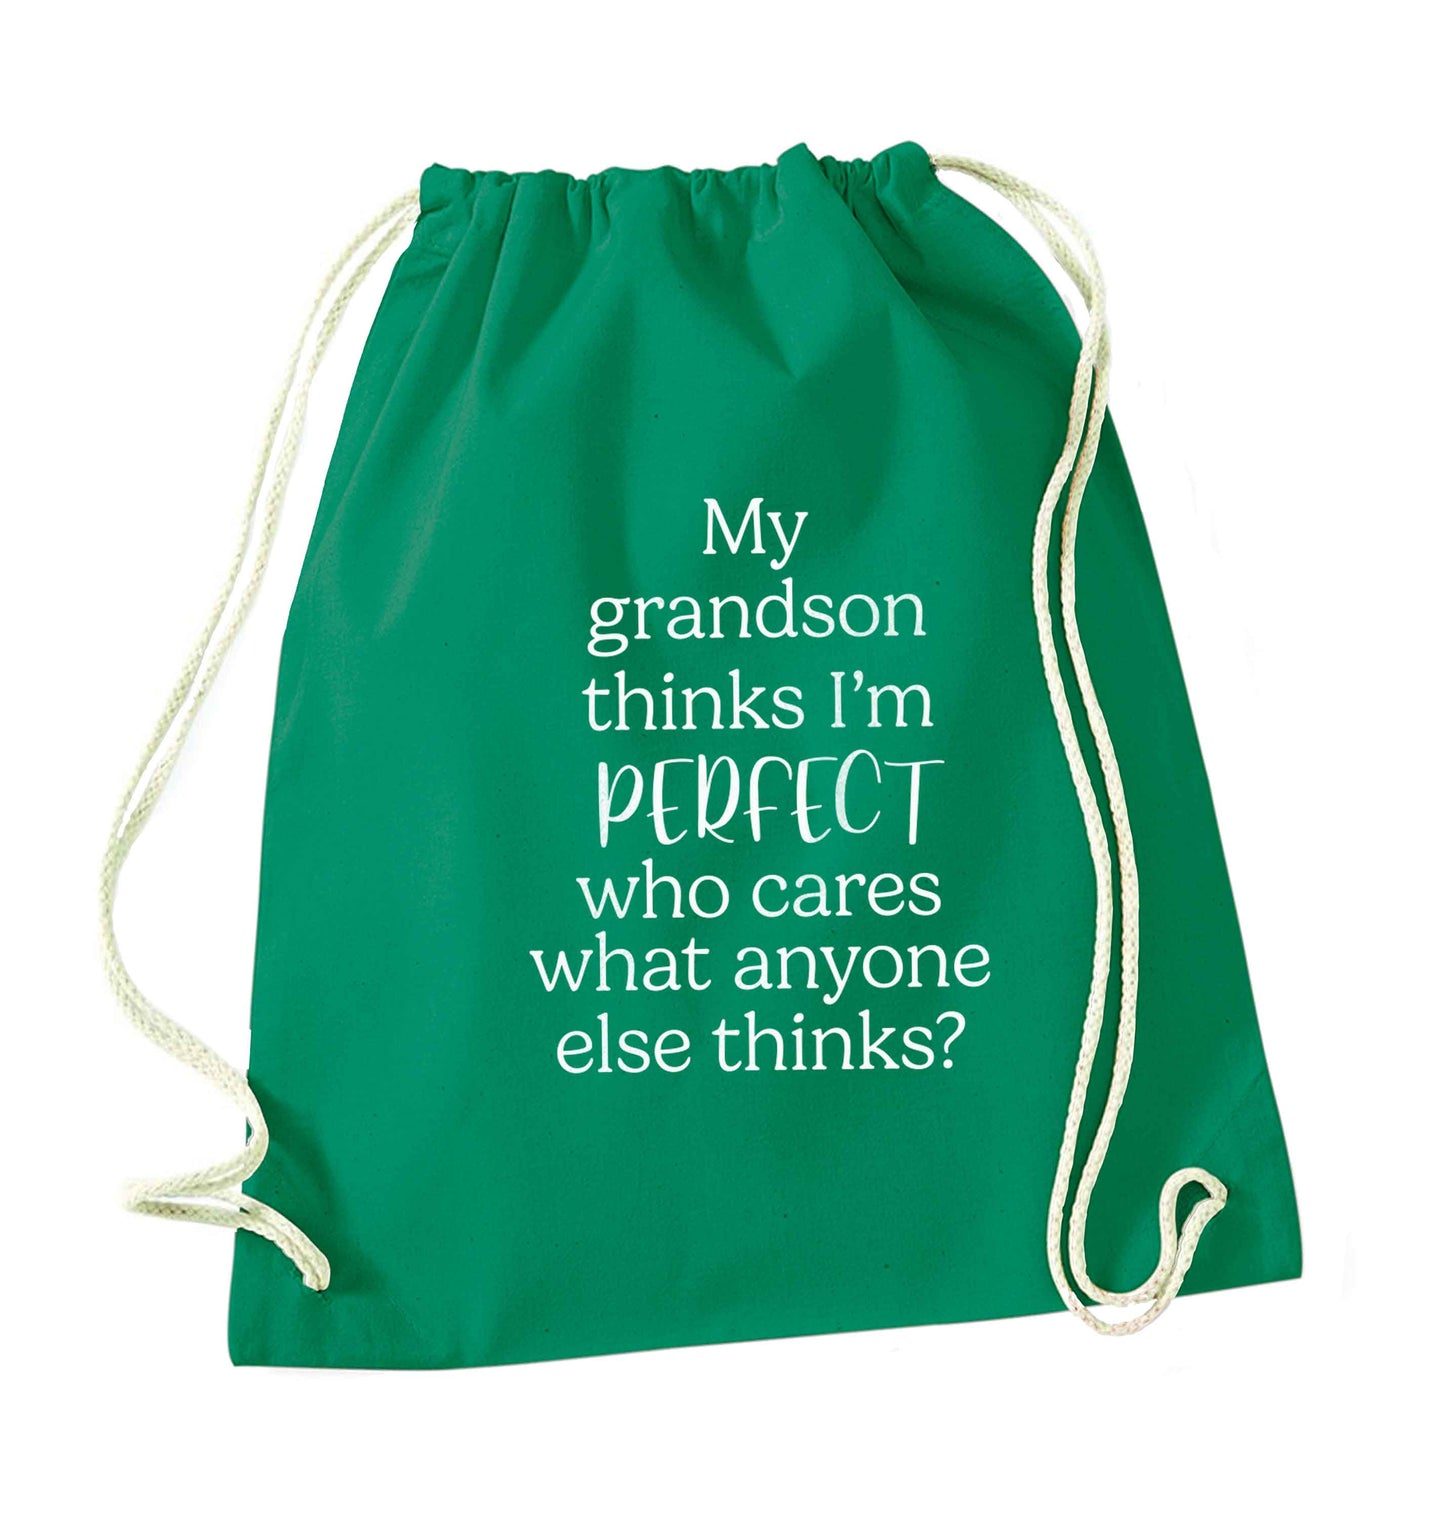 My grandson thinks I'm perfect green drawstring bag